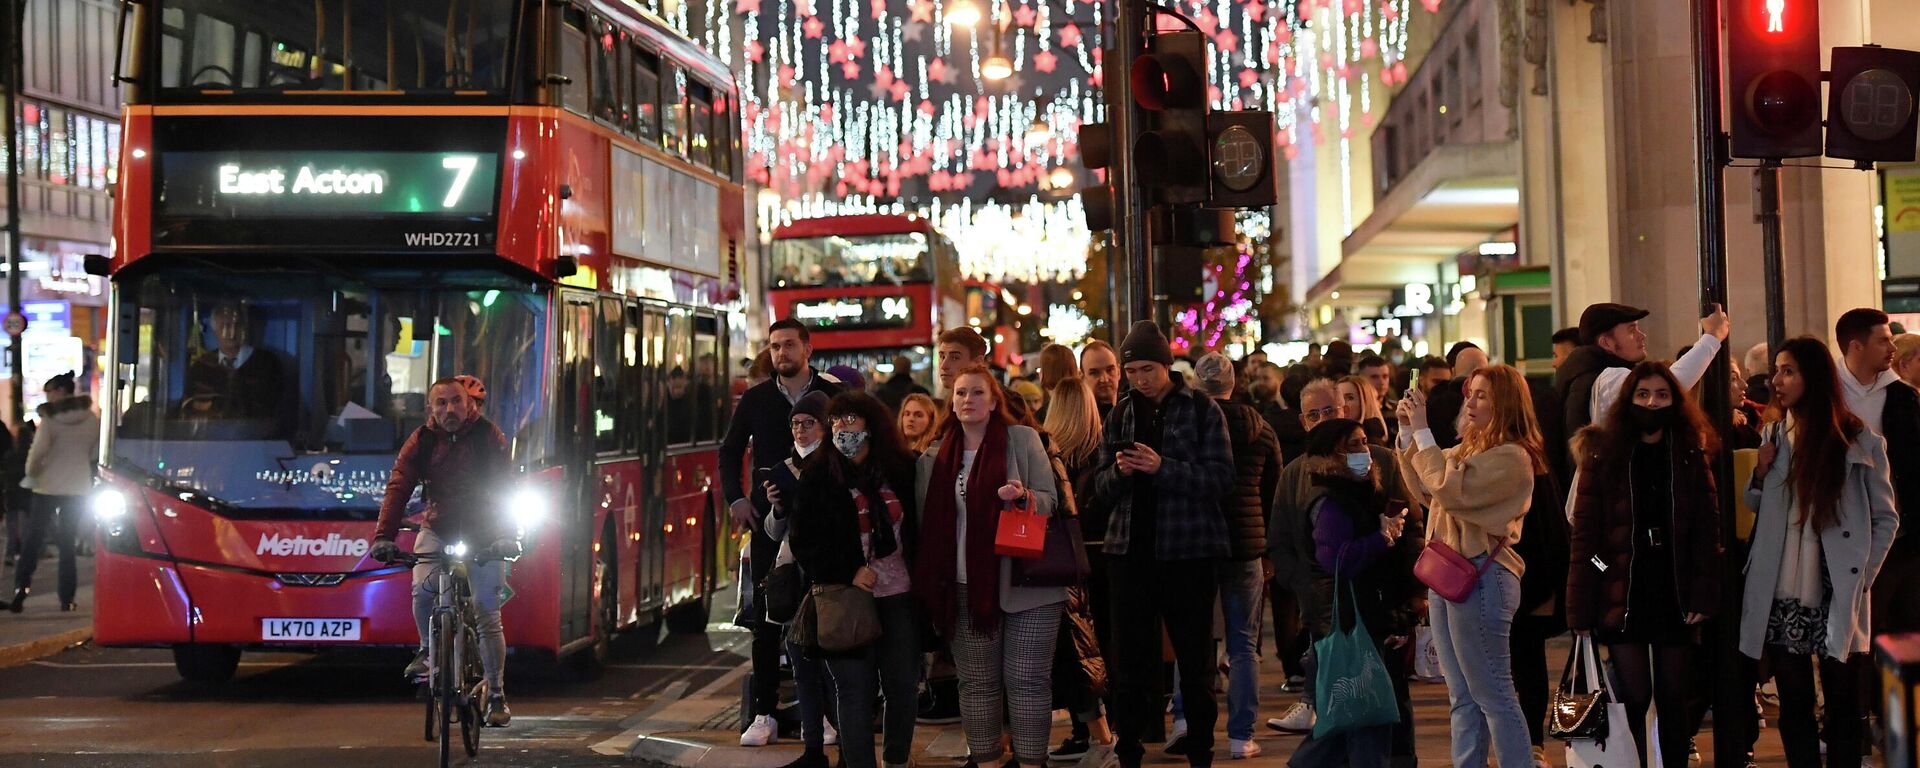 Bus passengers and shoppers view a Christmas light display along Oxford Street, London, Britain, November 20, 2021 - Sputnik International, 1920, 25.12.2021